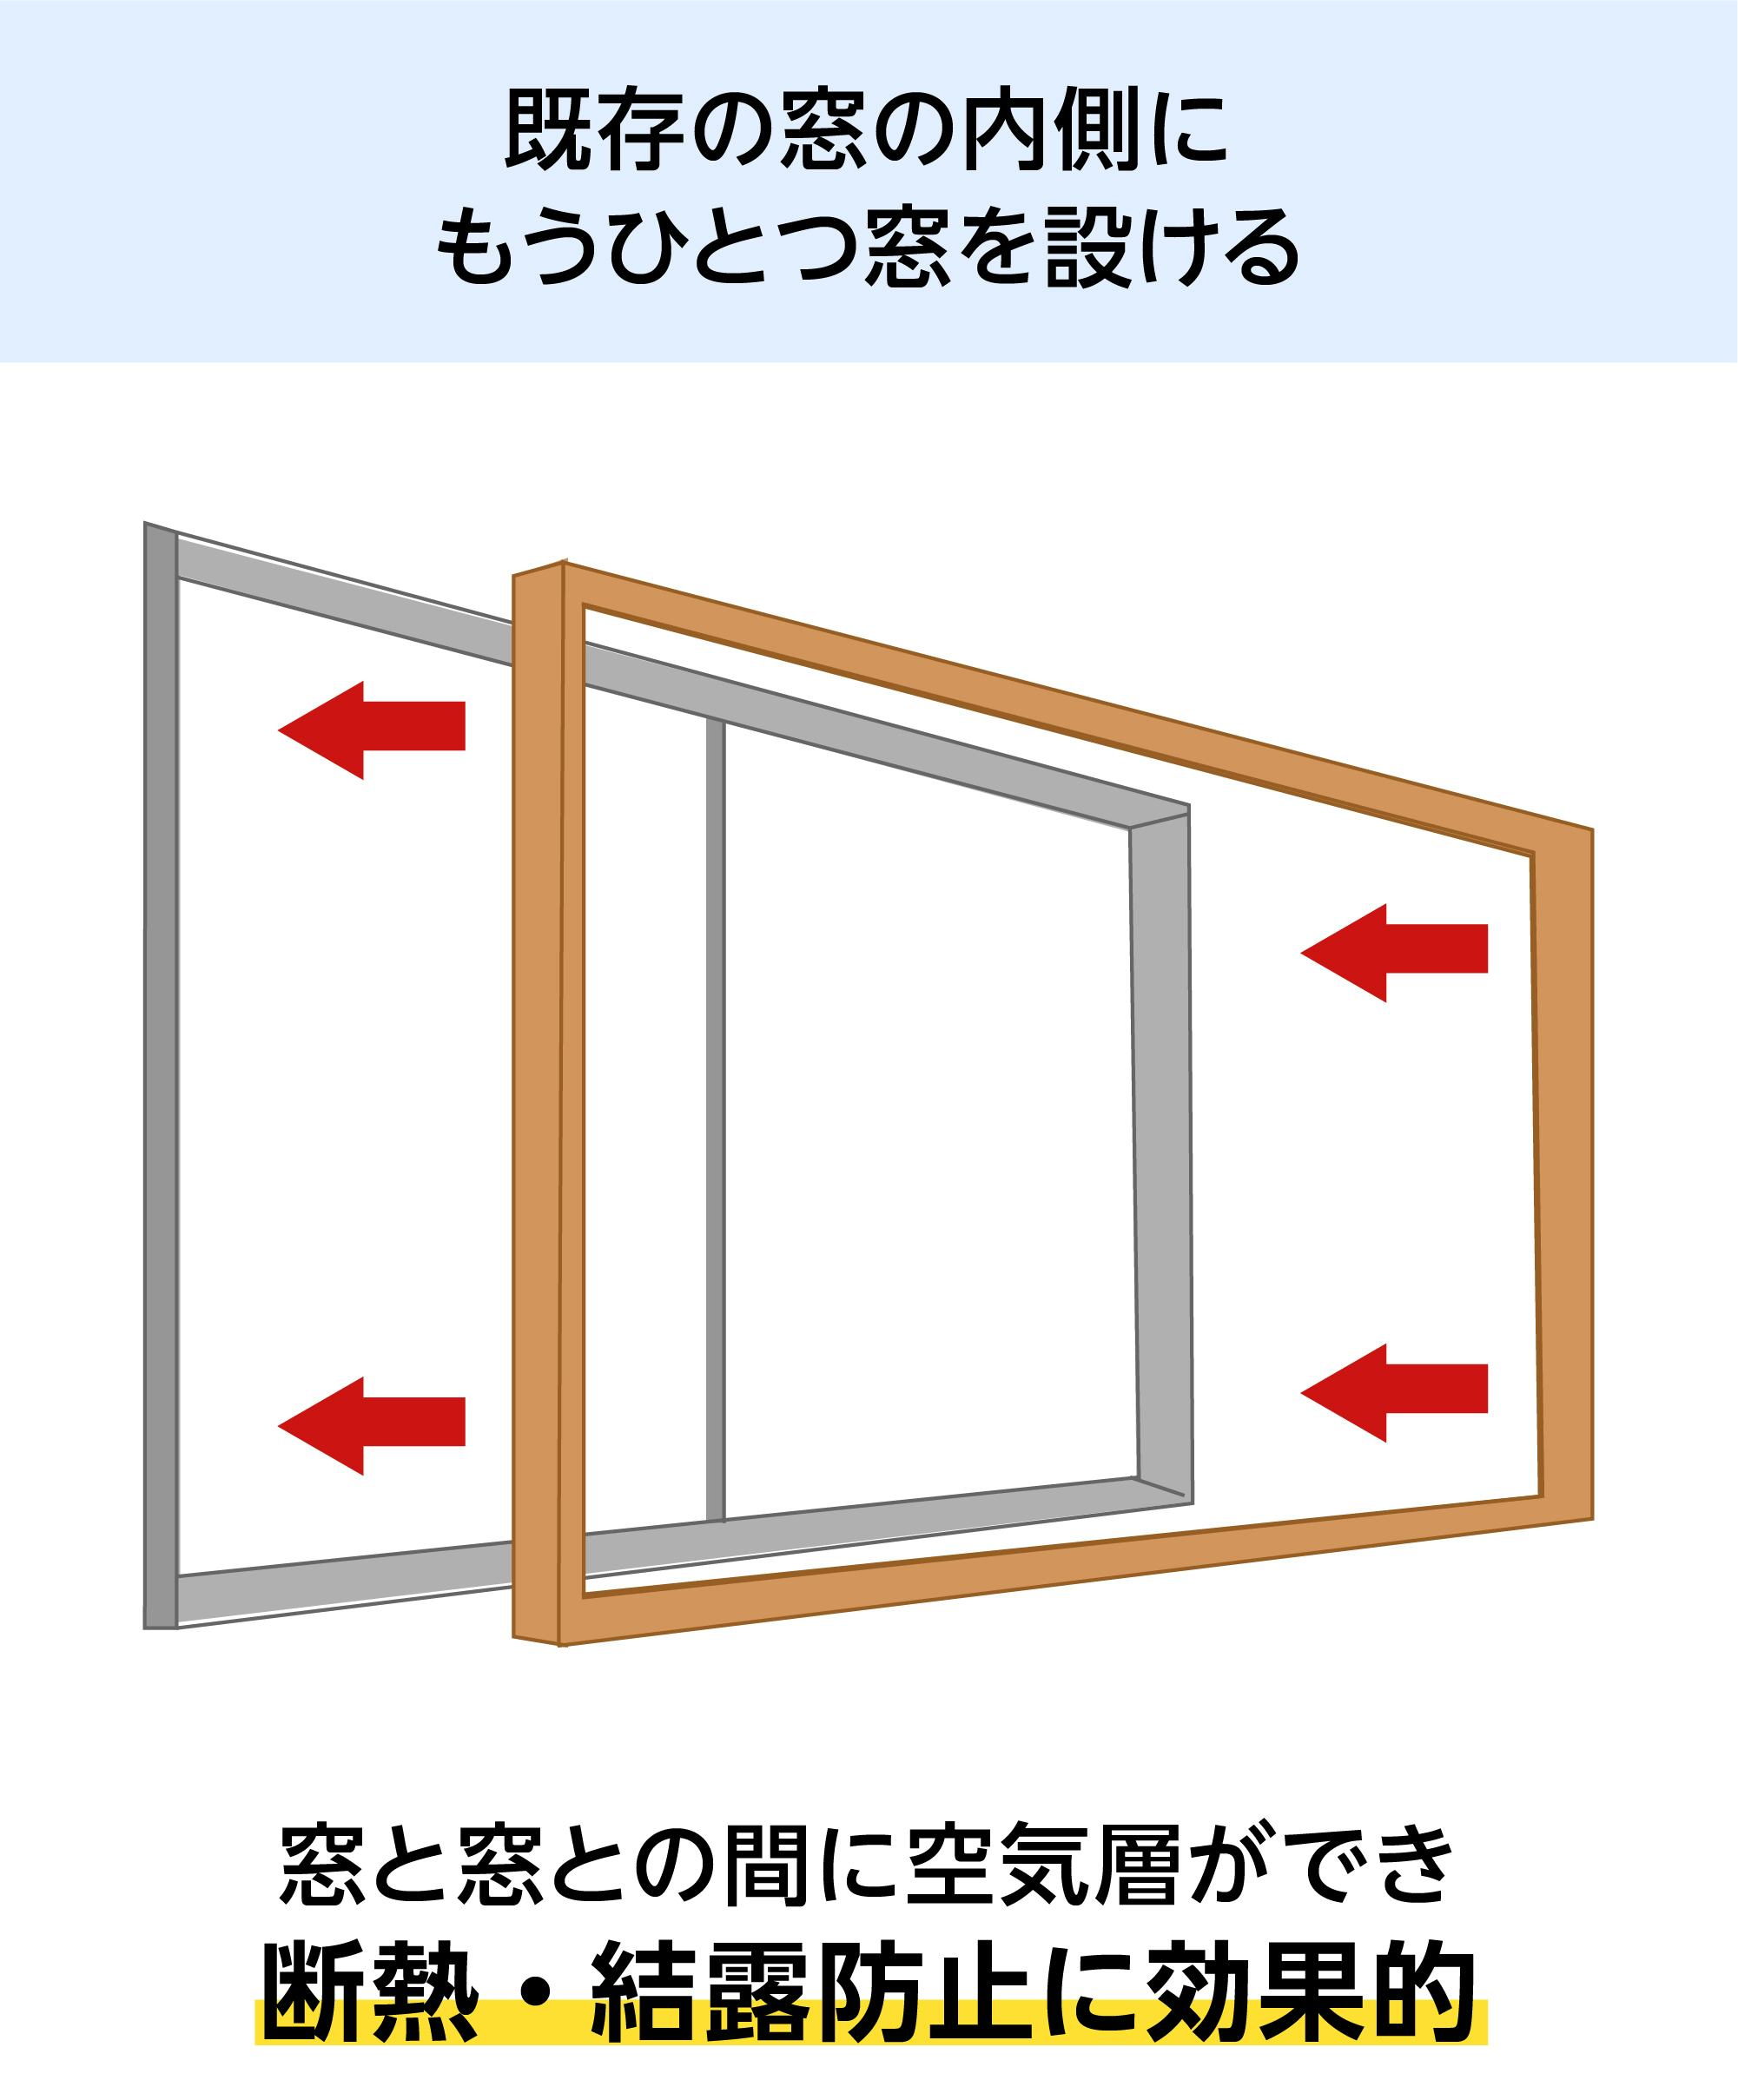 LIXILの内窓「インプラス」浴室仕様 (ユニットバス納まり) 引違い窓 - 既存の窓の内側にもうひとつ窓を設ける